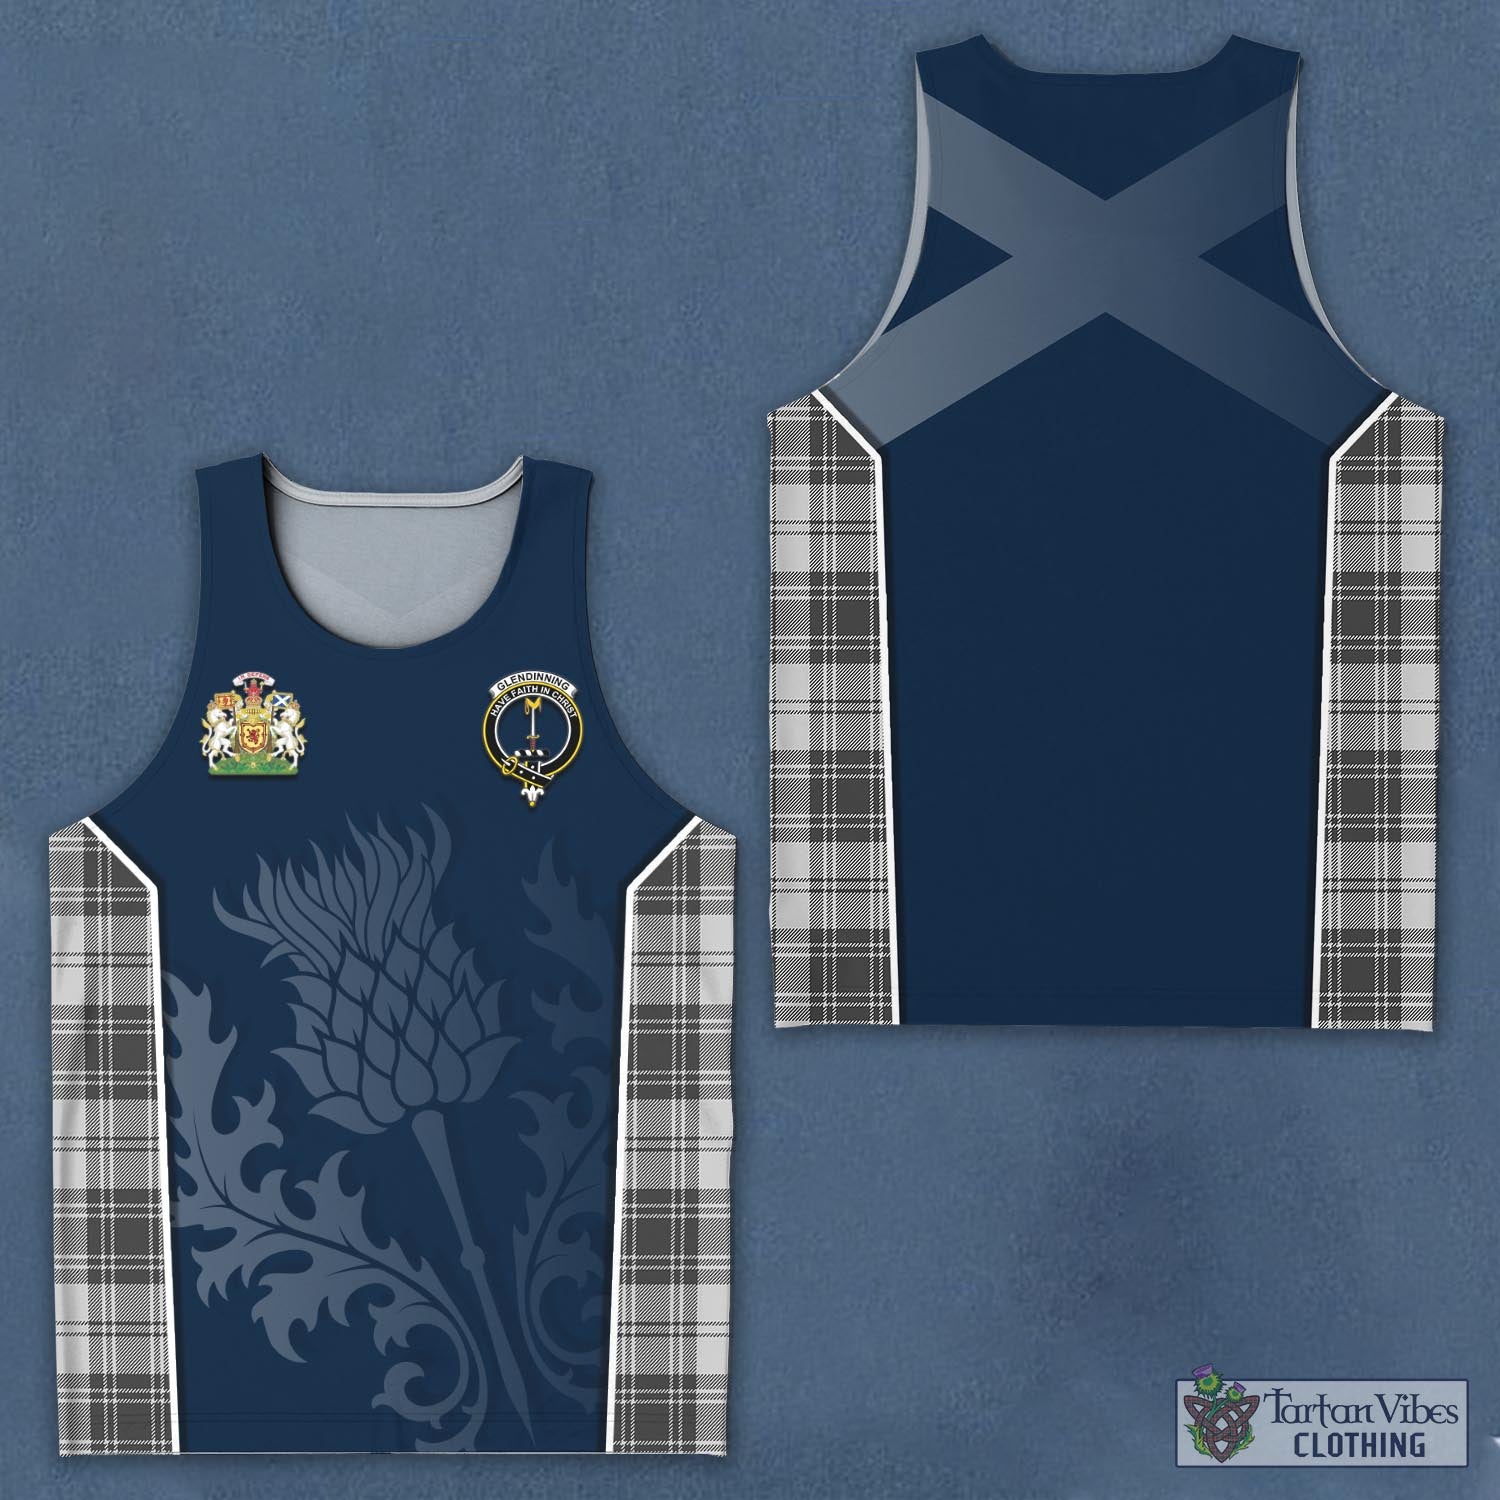 Tartan Vibes Clothing Glendinning Tartan Men's Tanks Top with Family Crest and Scottish Thistle Vibes Sport Style